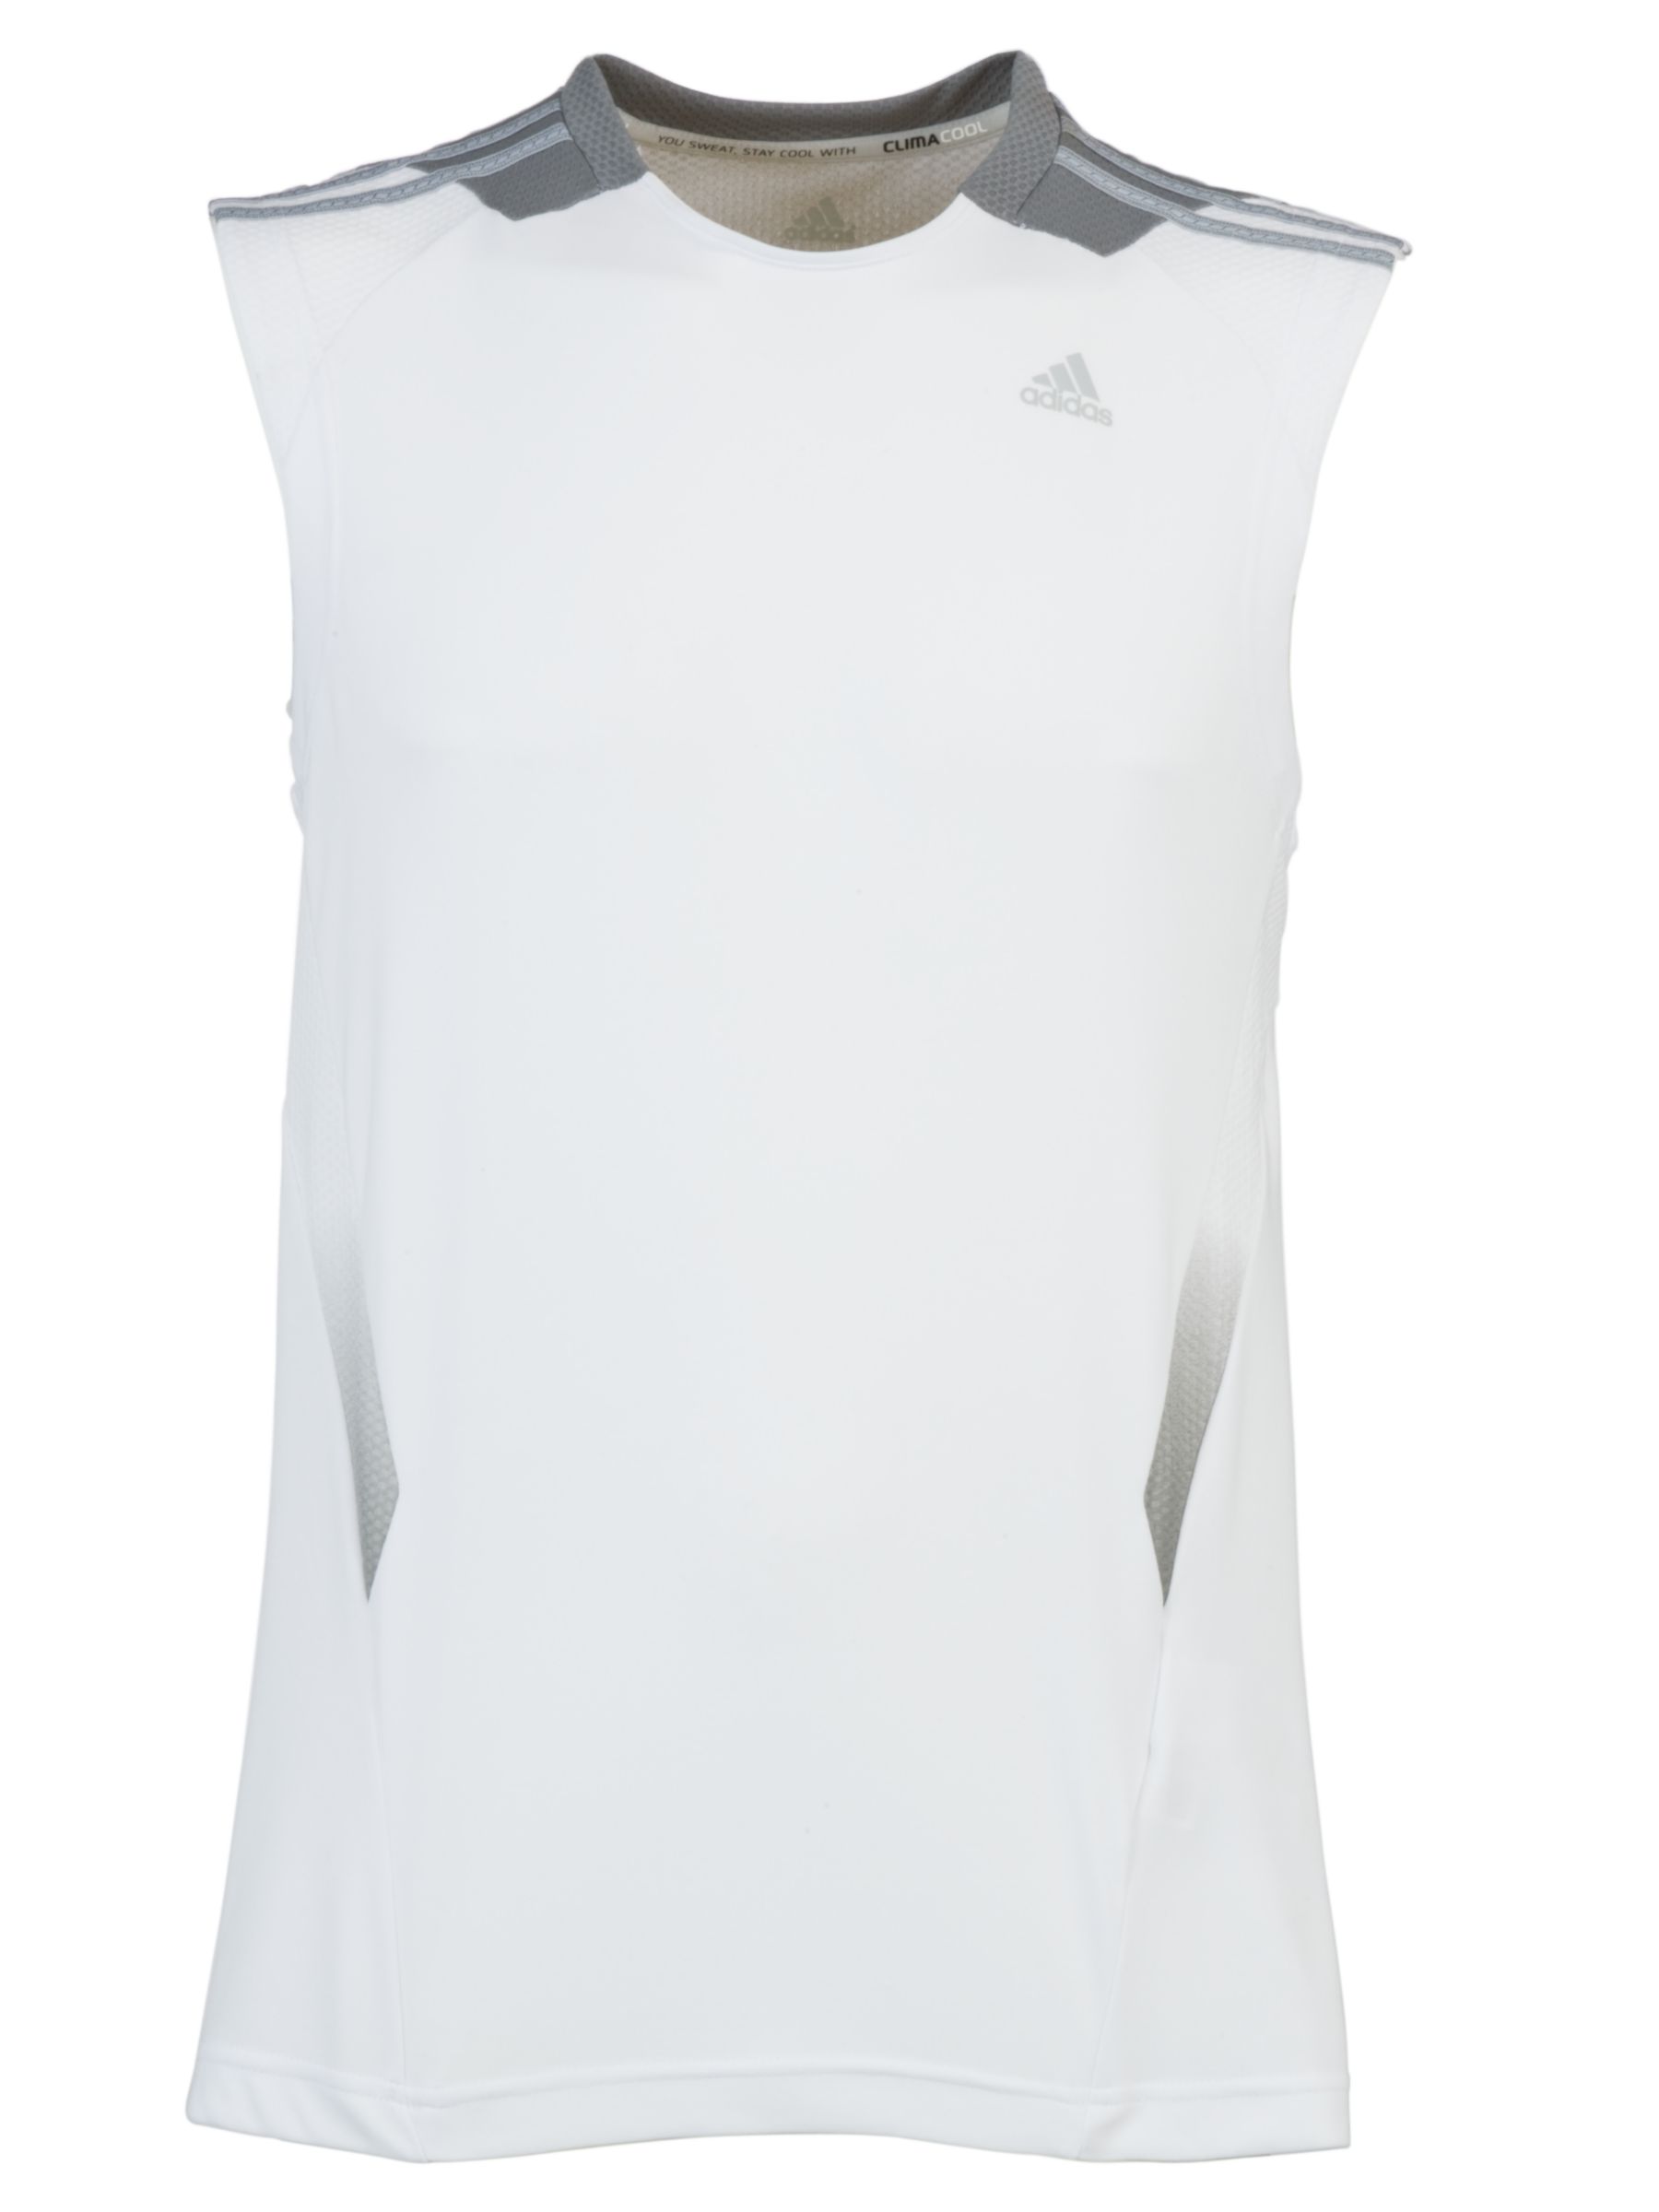 Adidas Clima365 Sleeveless T-Shirt, White/Shift